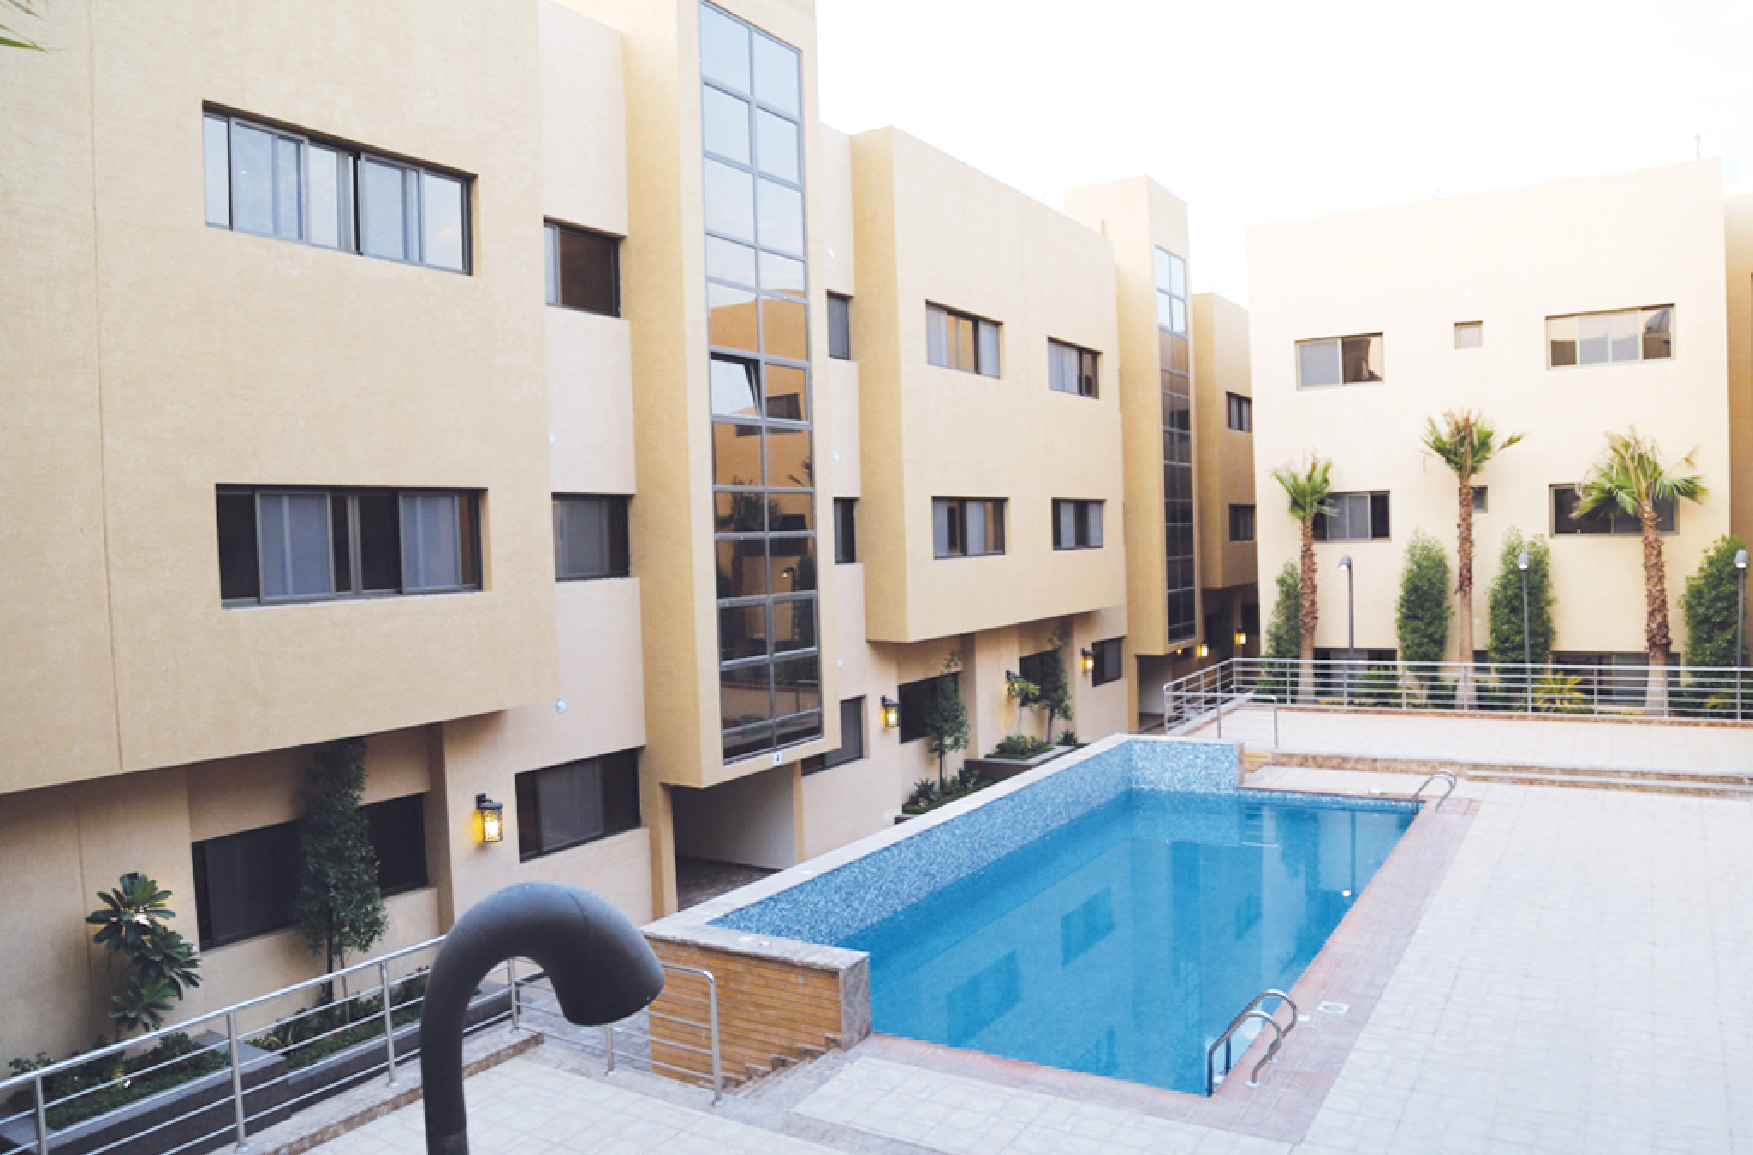 Dar Al Tanmiyat For Real Estate Development Riyadh | Dar Al Tanmiyat For Real Estate Development KSA